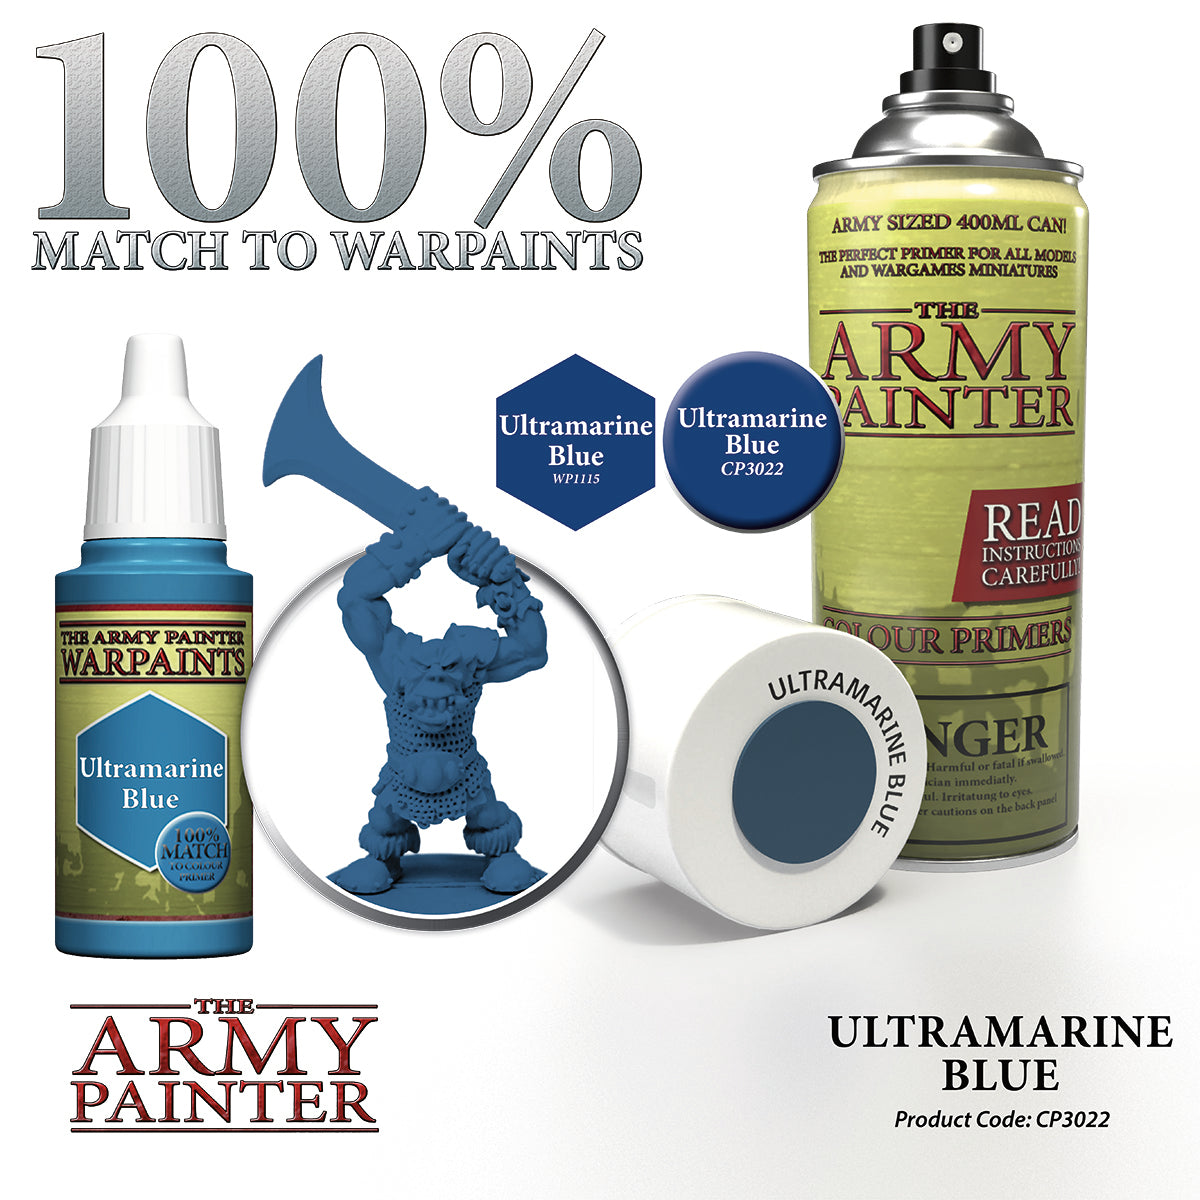 Army Painter: Ultramarine Blue Spray Paint Primer